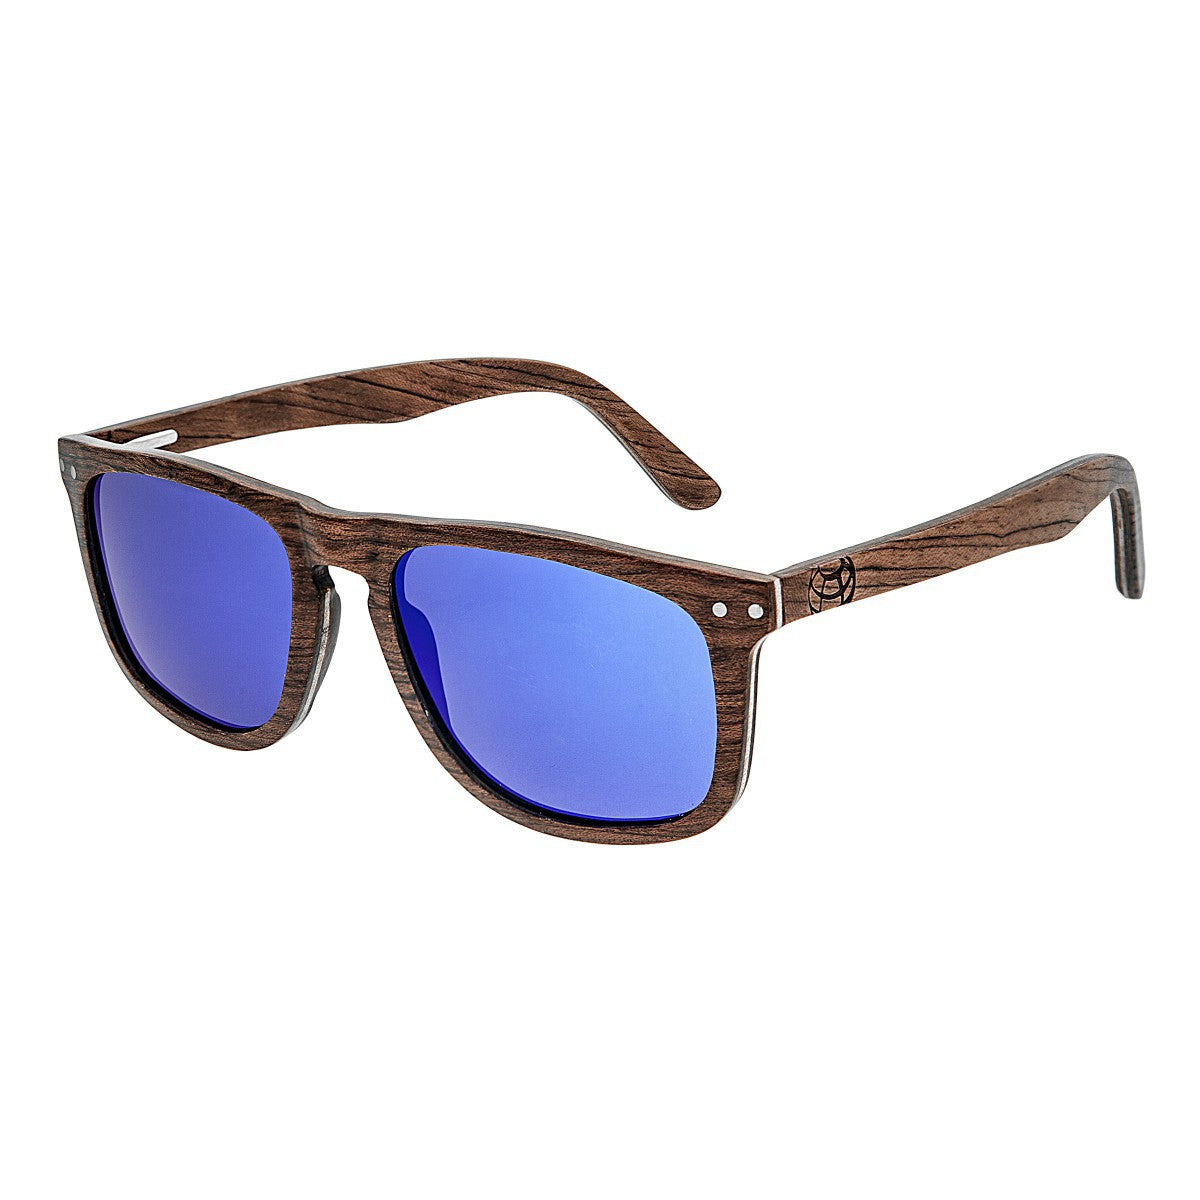 Earth Wood Pacific Polarized Sunglasses - Brown/Blue - ESG008BL